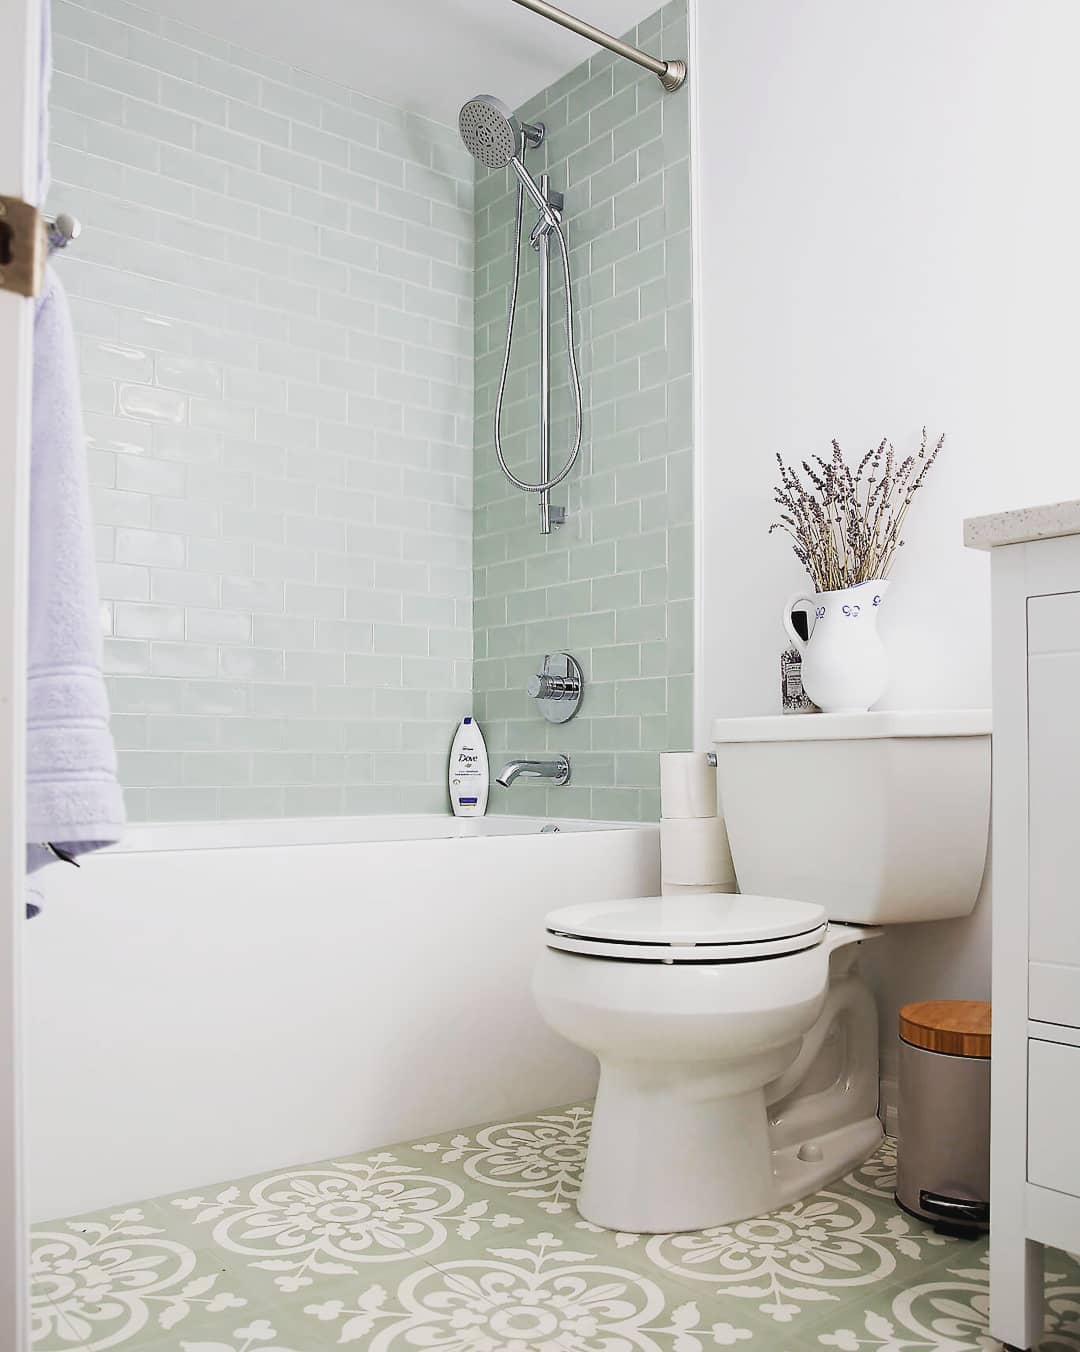 HDB Bathroom Renovation Tips - Shower Tub Combo